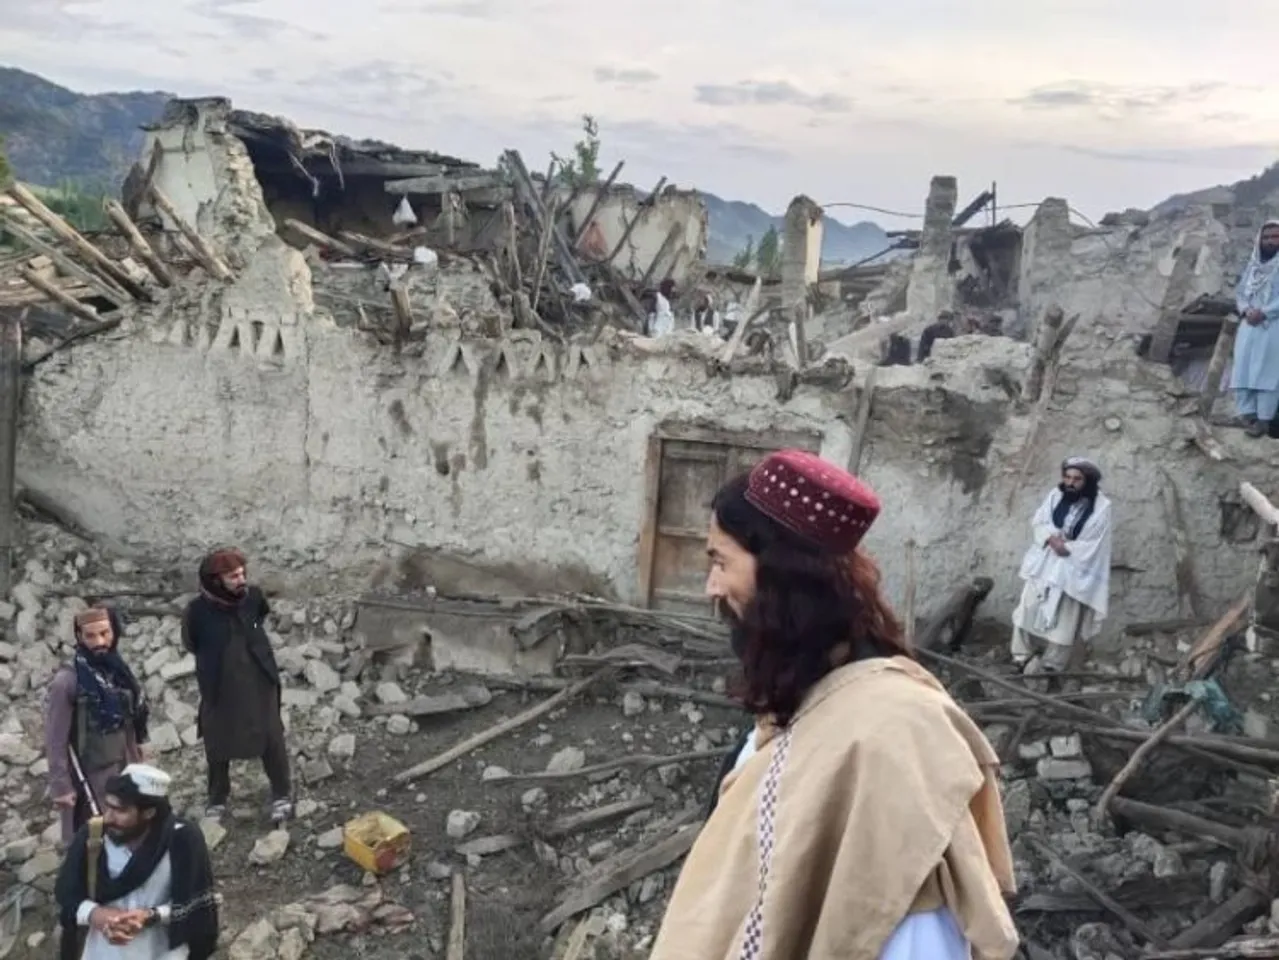 Scene from earthquake devastation in Afghanistan